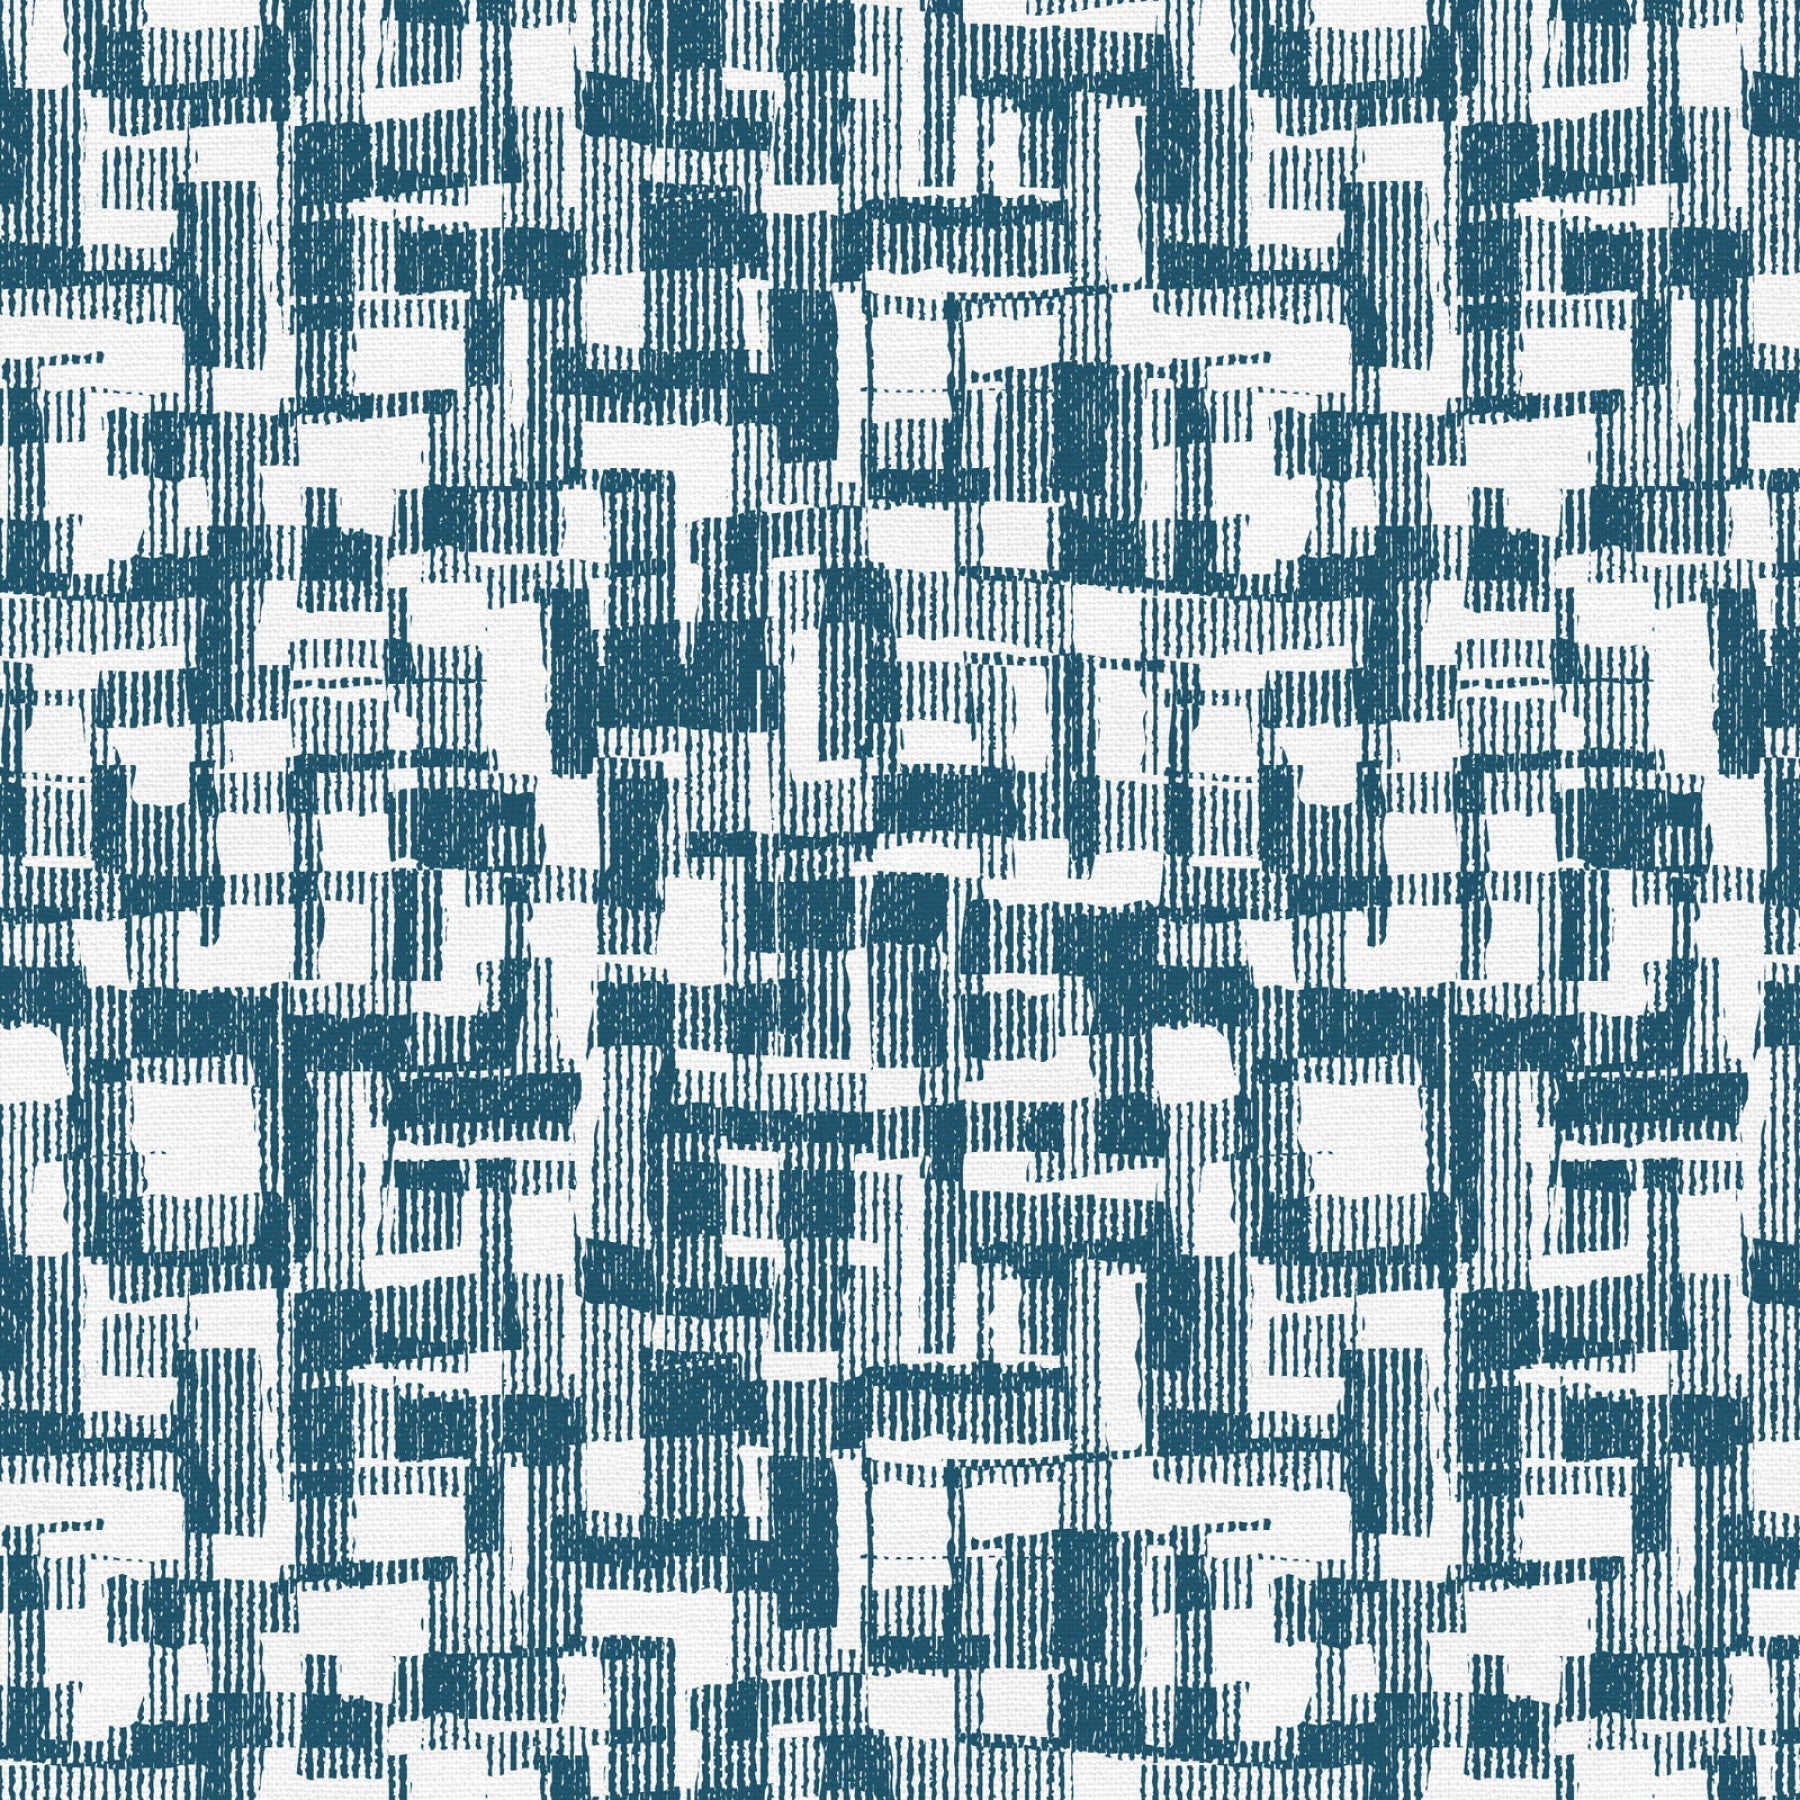 Blue Teal Barcodes Cotton Wideback Fabric Per Yard